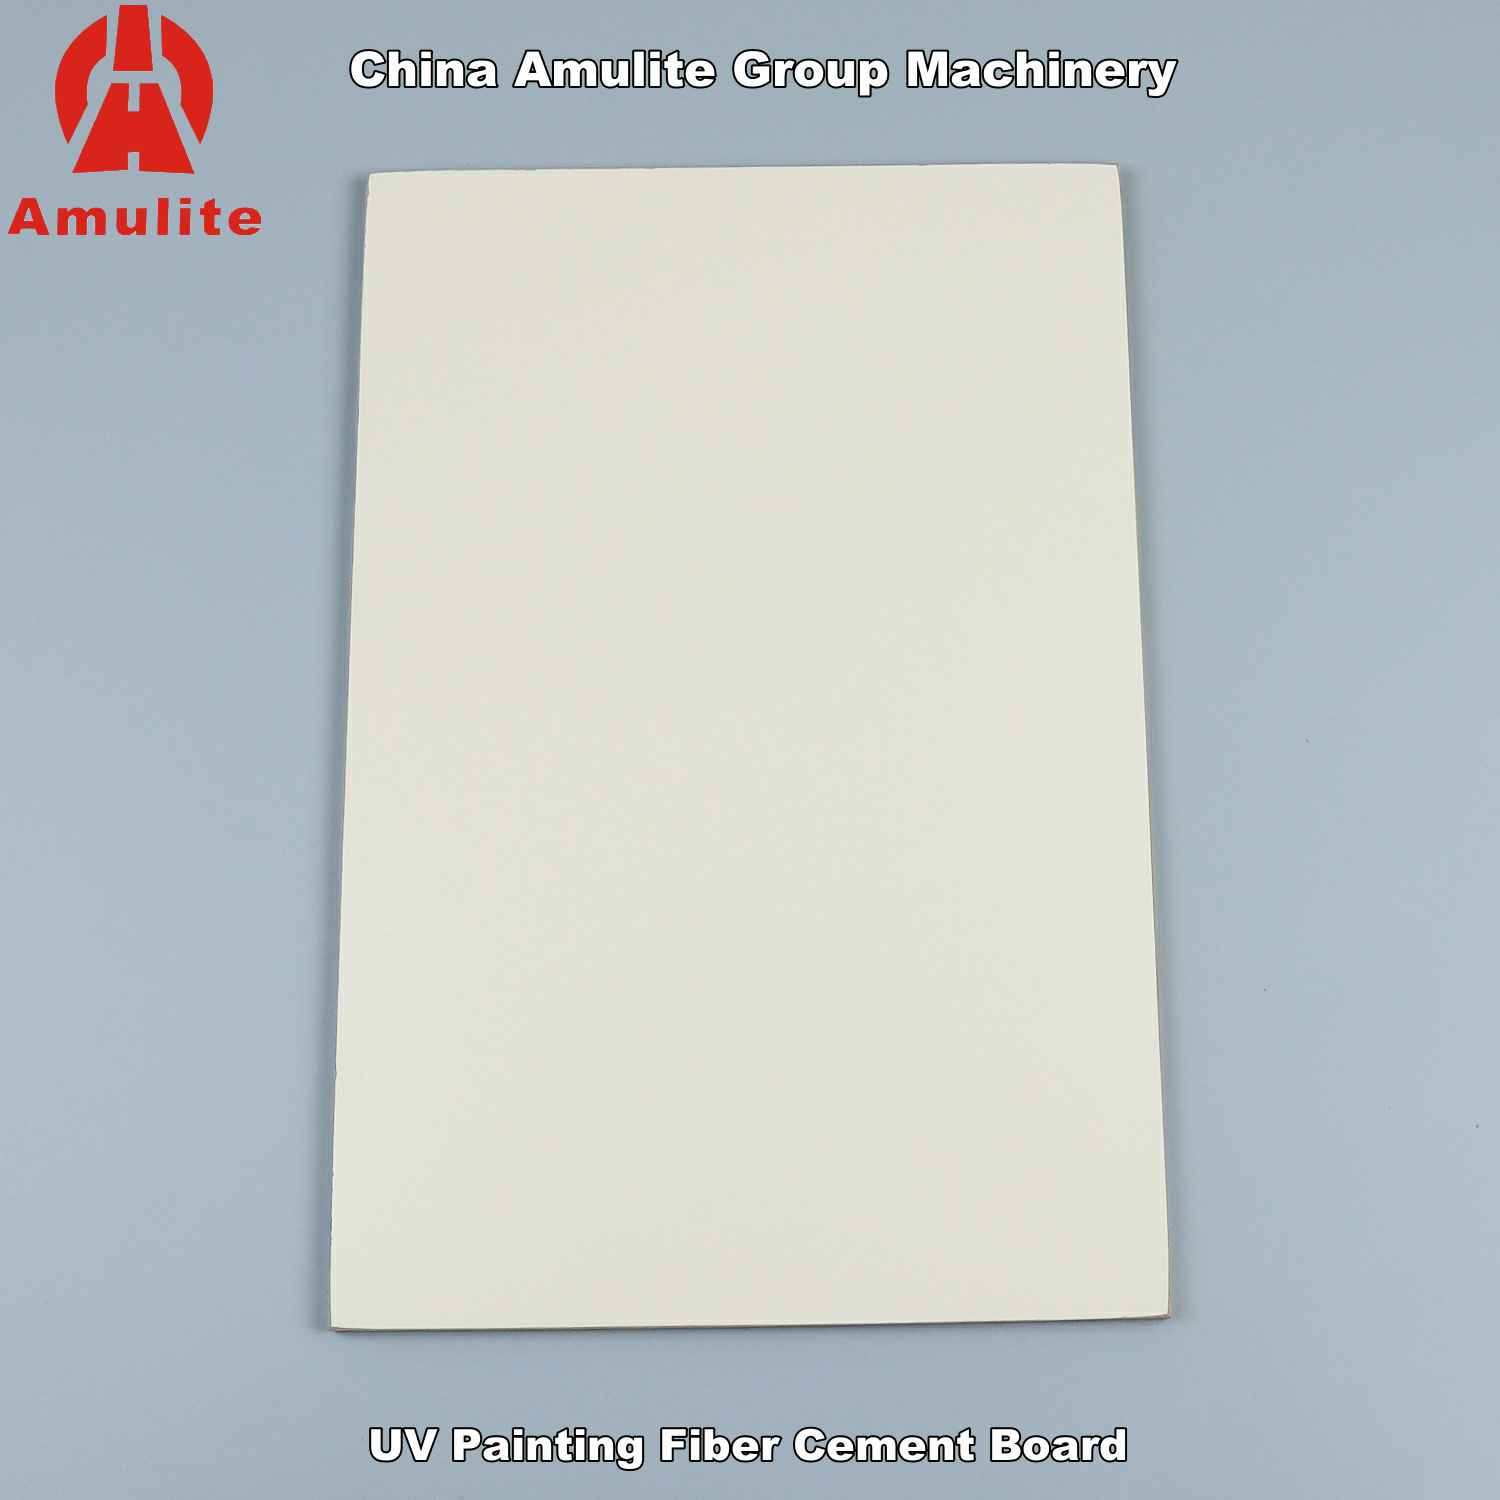 UV Painting Fiber Cement Board (13)